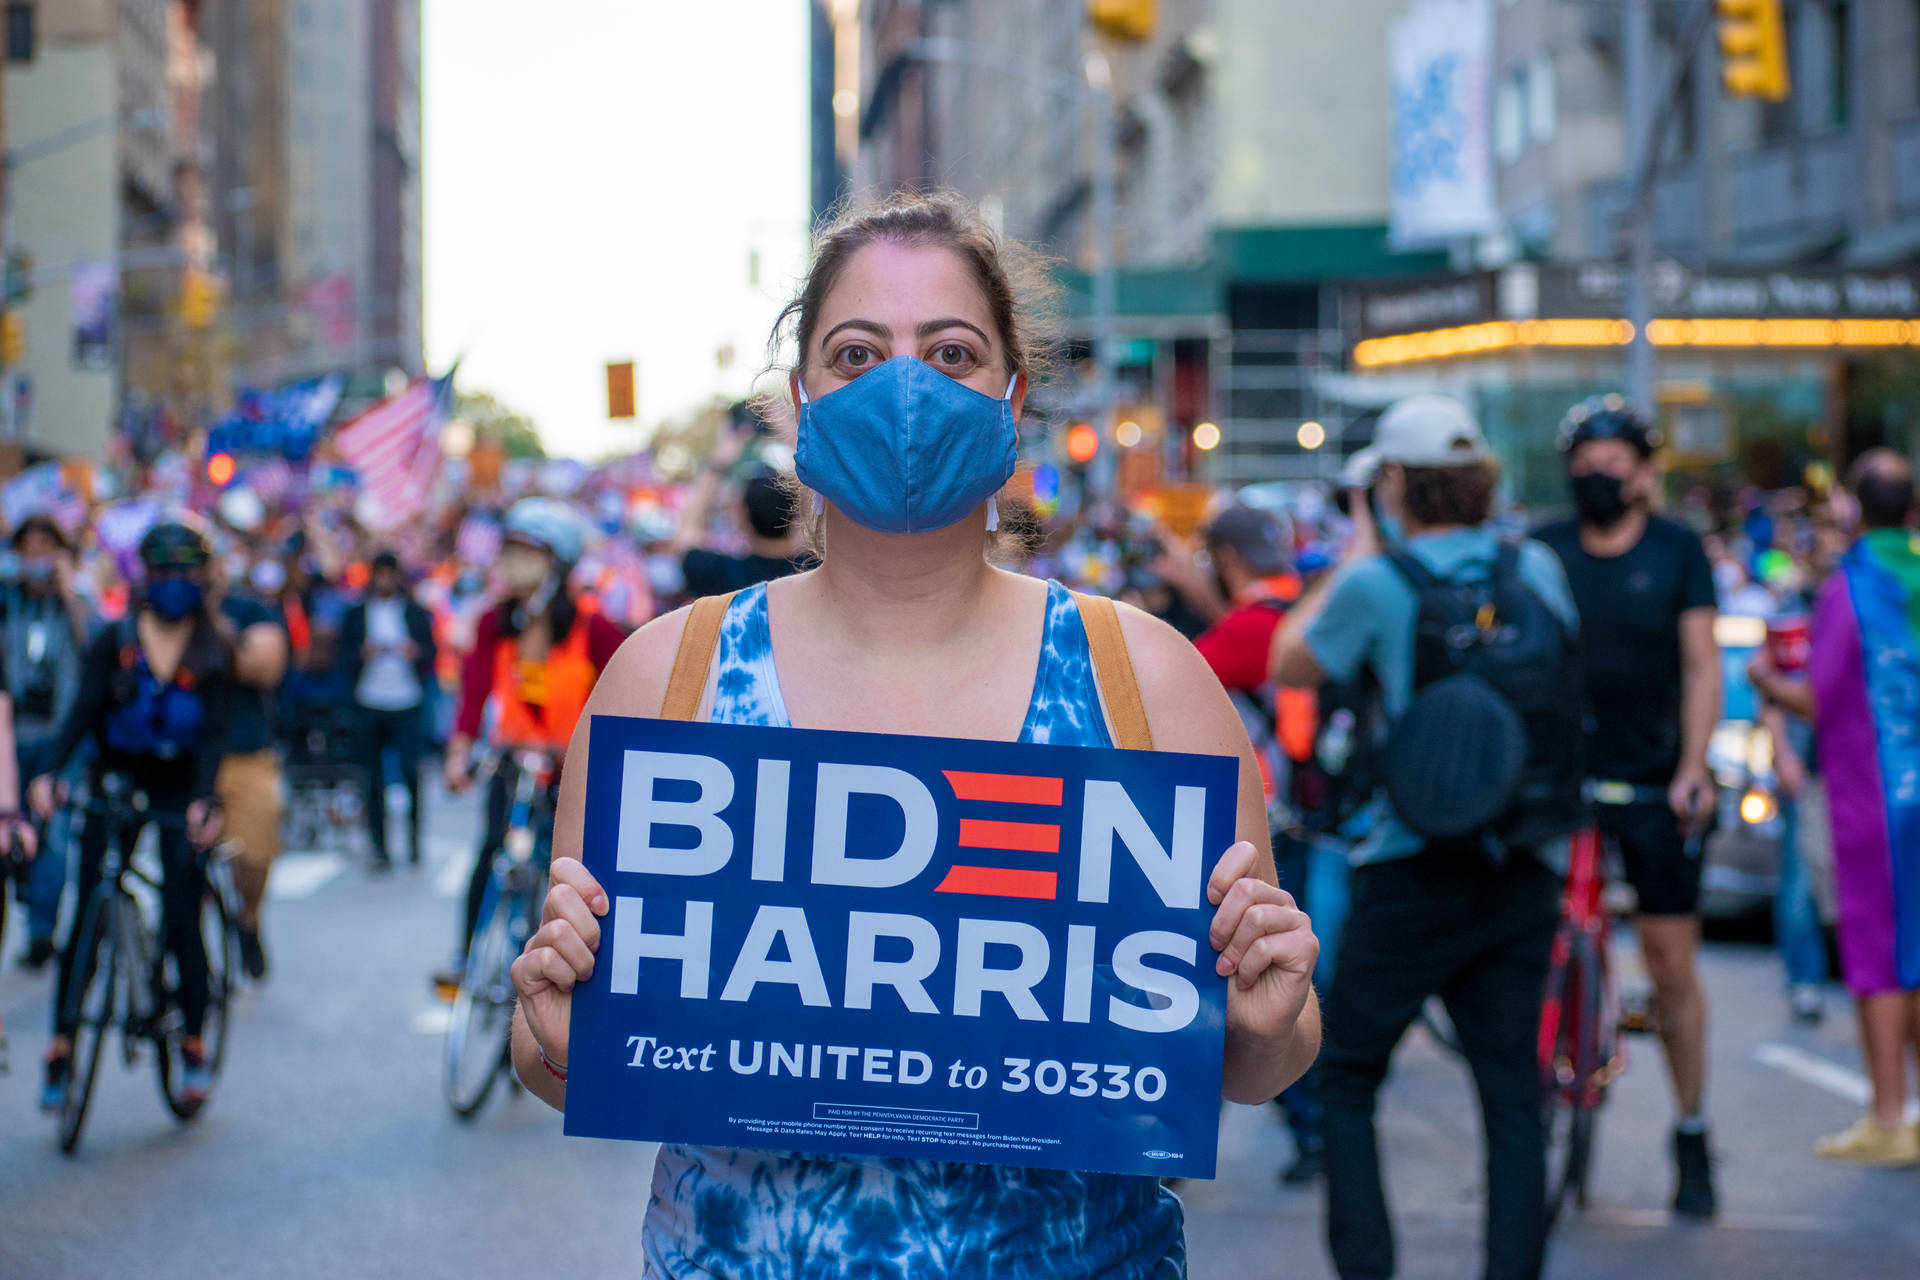 Joe Biden And Harris Supporter Background